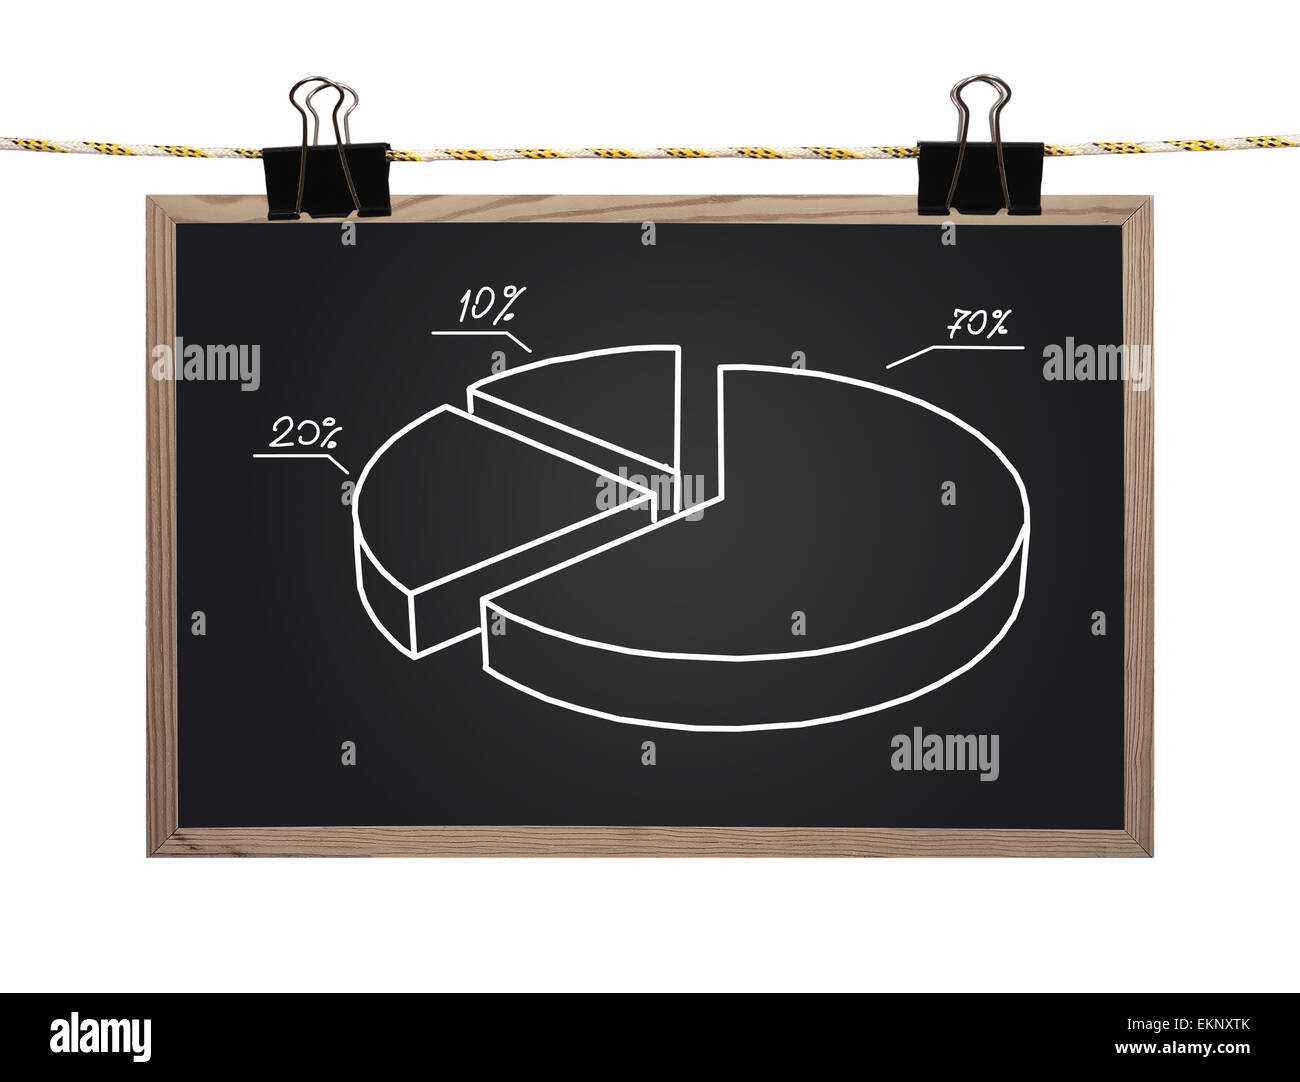 blackboard with pie chart Stock Photo